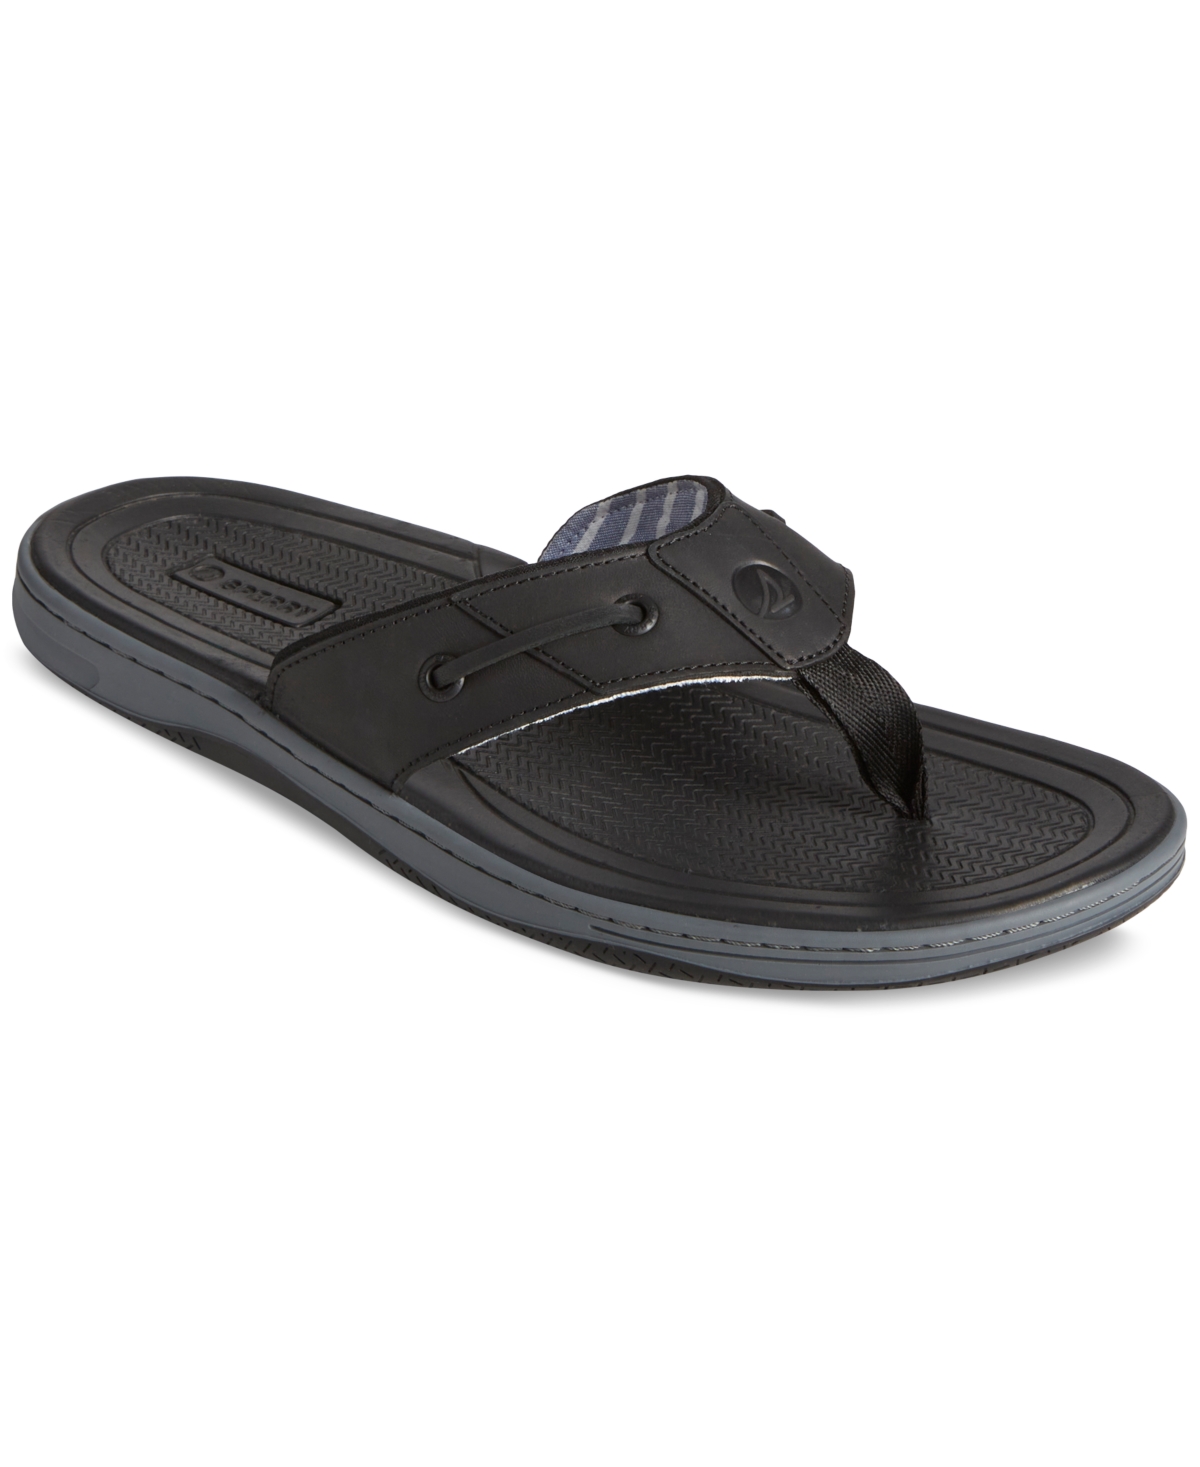 Men's Baitfish Thong Leather Sandals - Black